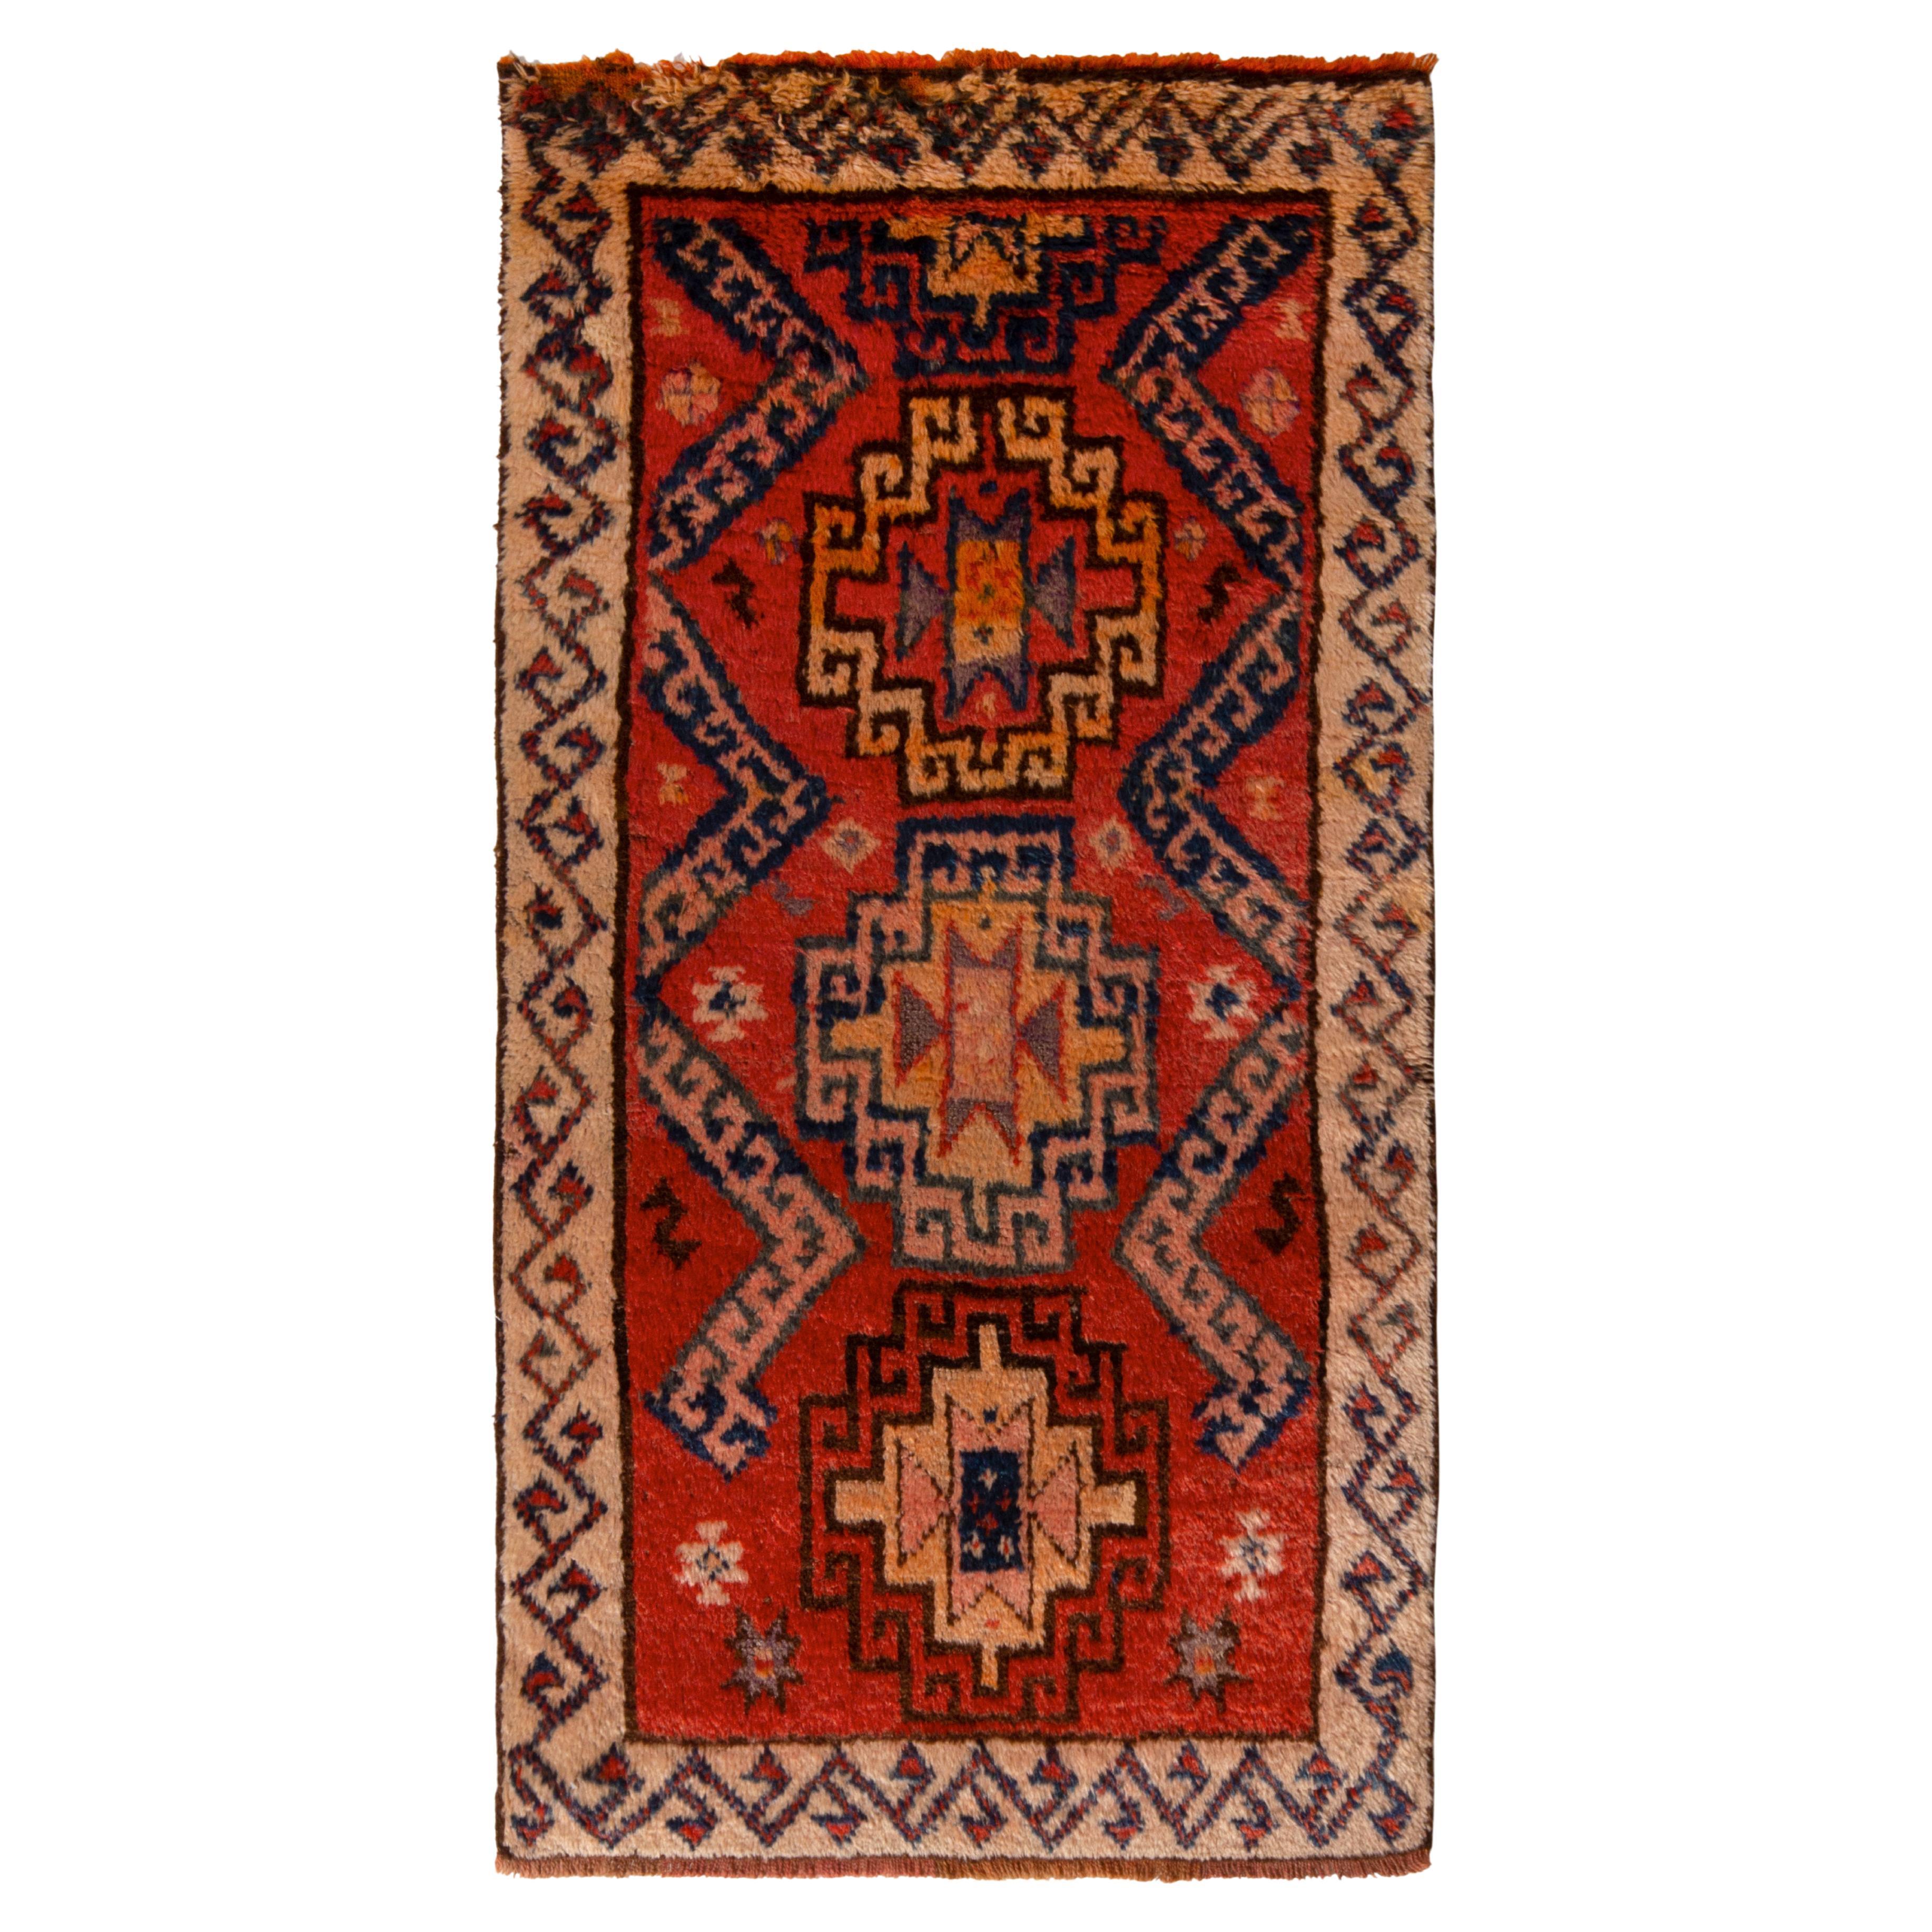 Antique Persian Rug Red Beige Brown Gabbeh Tribal Pattern by Rug & Kilim